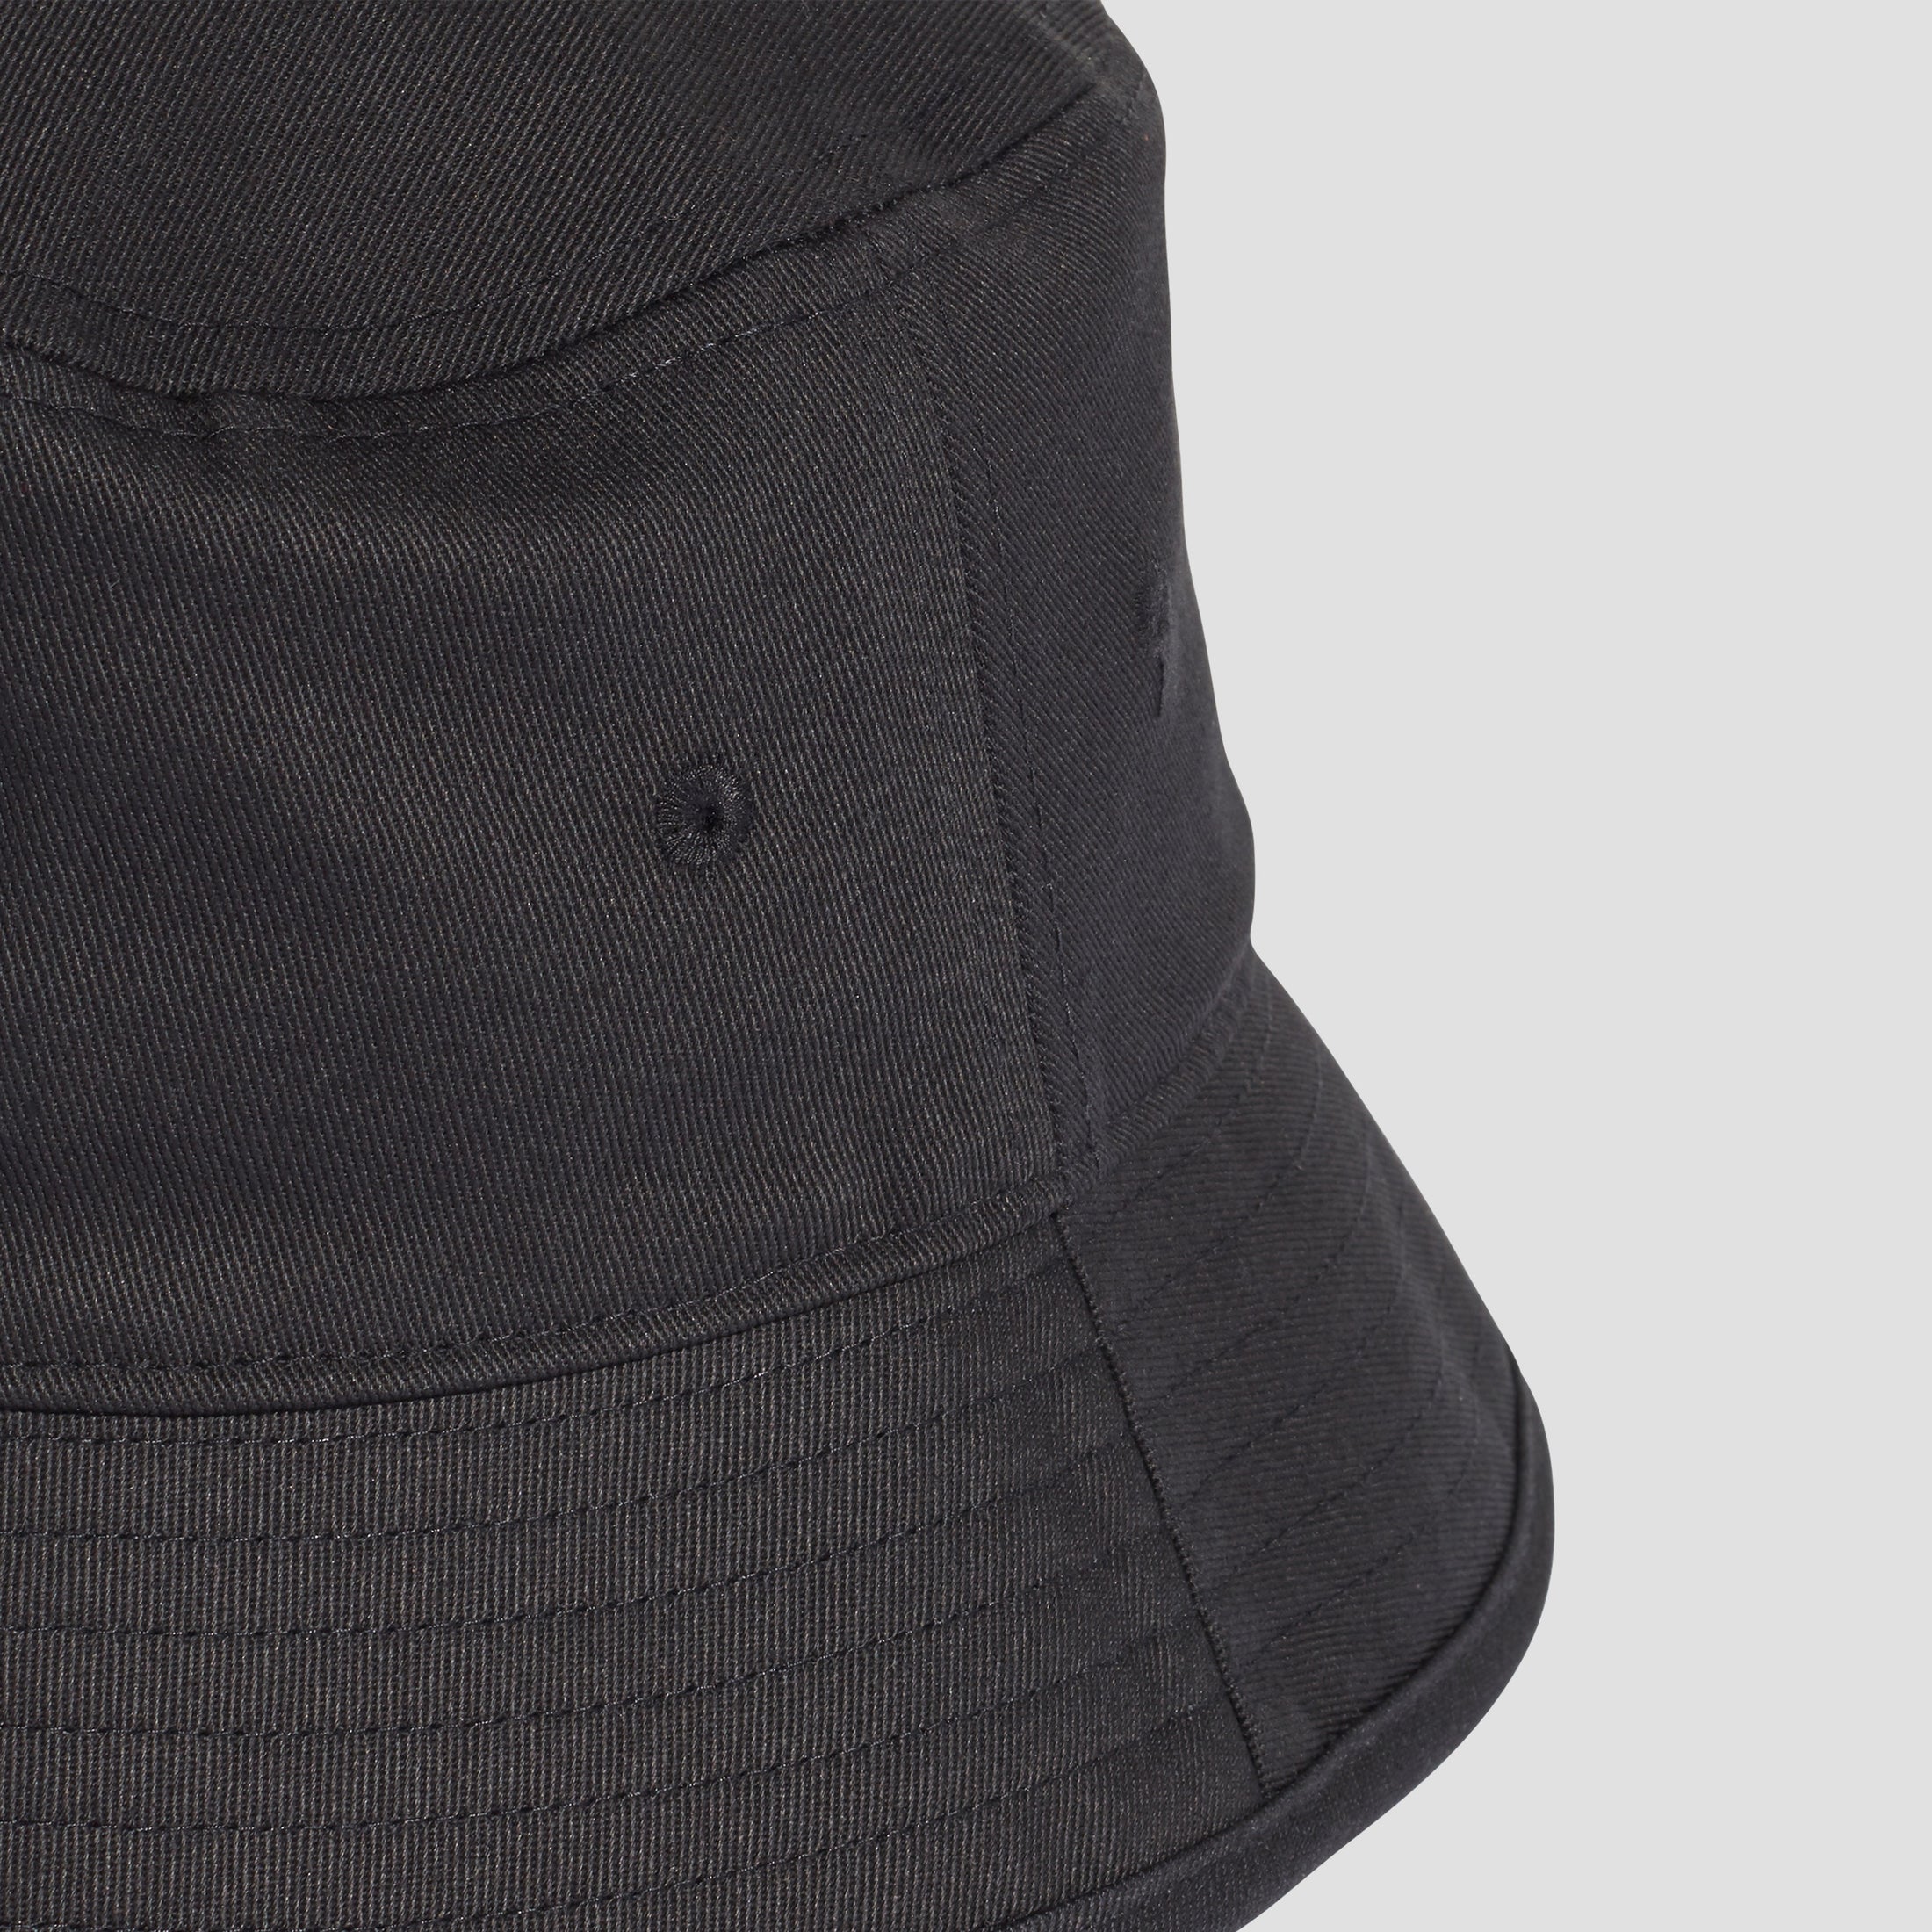 adidas Trefoil Bucket Hat Black / White